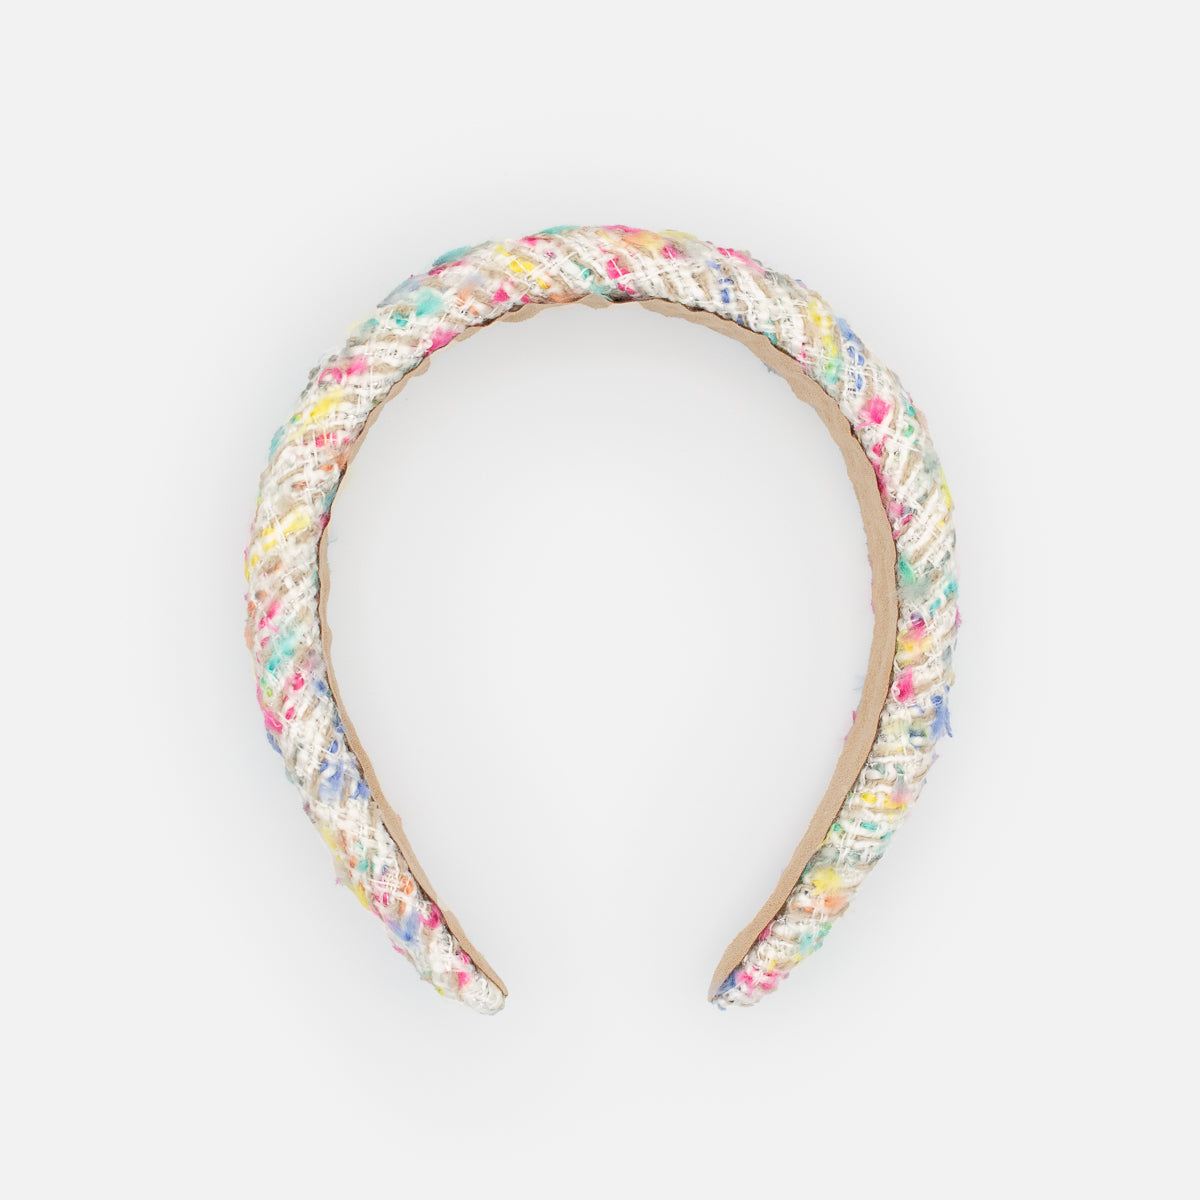 Multicolored knit headband